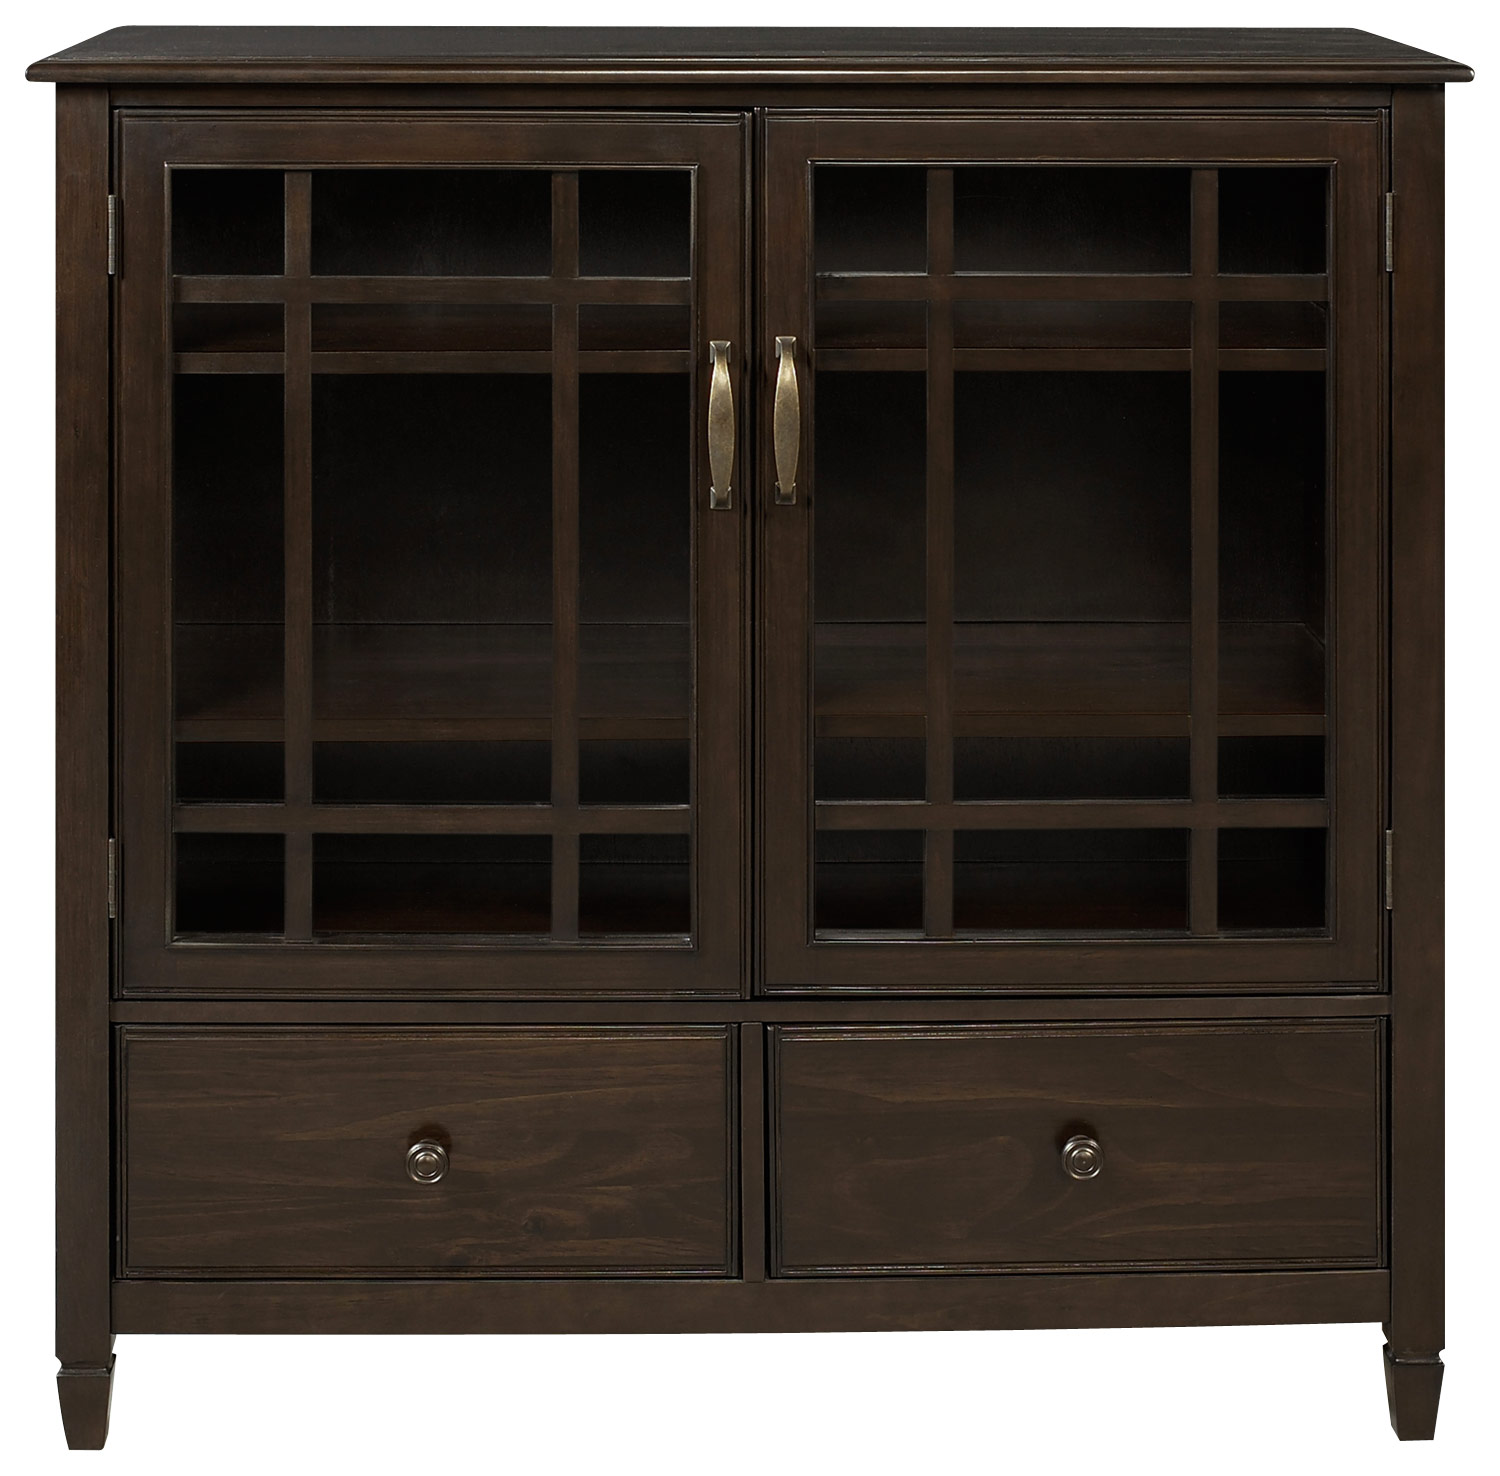 Simpli Home - Connaught Tall Storage Cabinet - Dark Chestnut Brown was $657.99 now $497.99 (24.0% off)